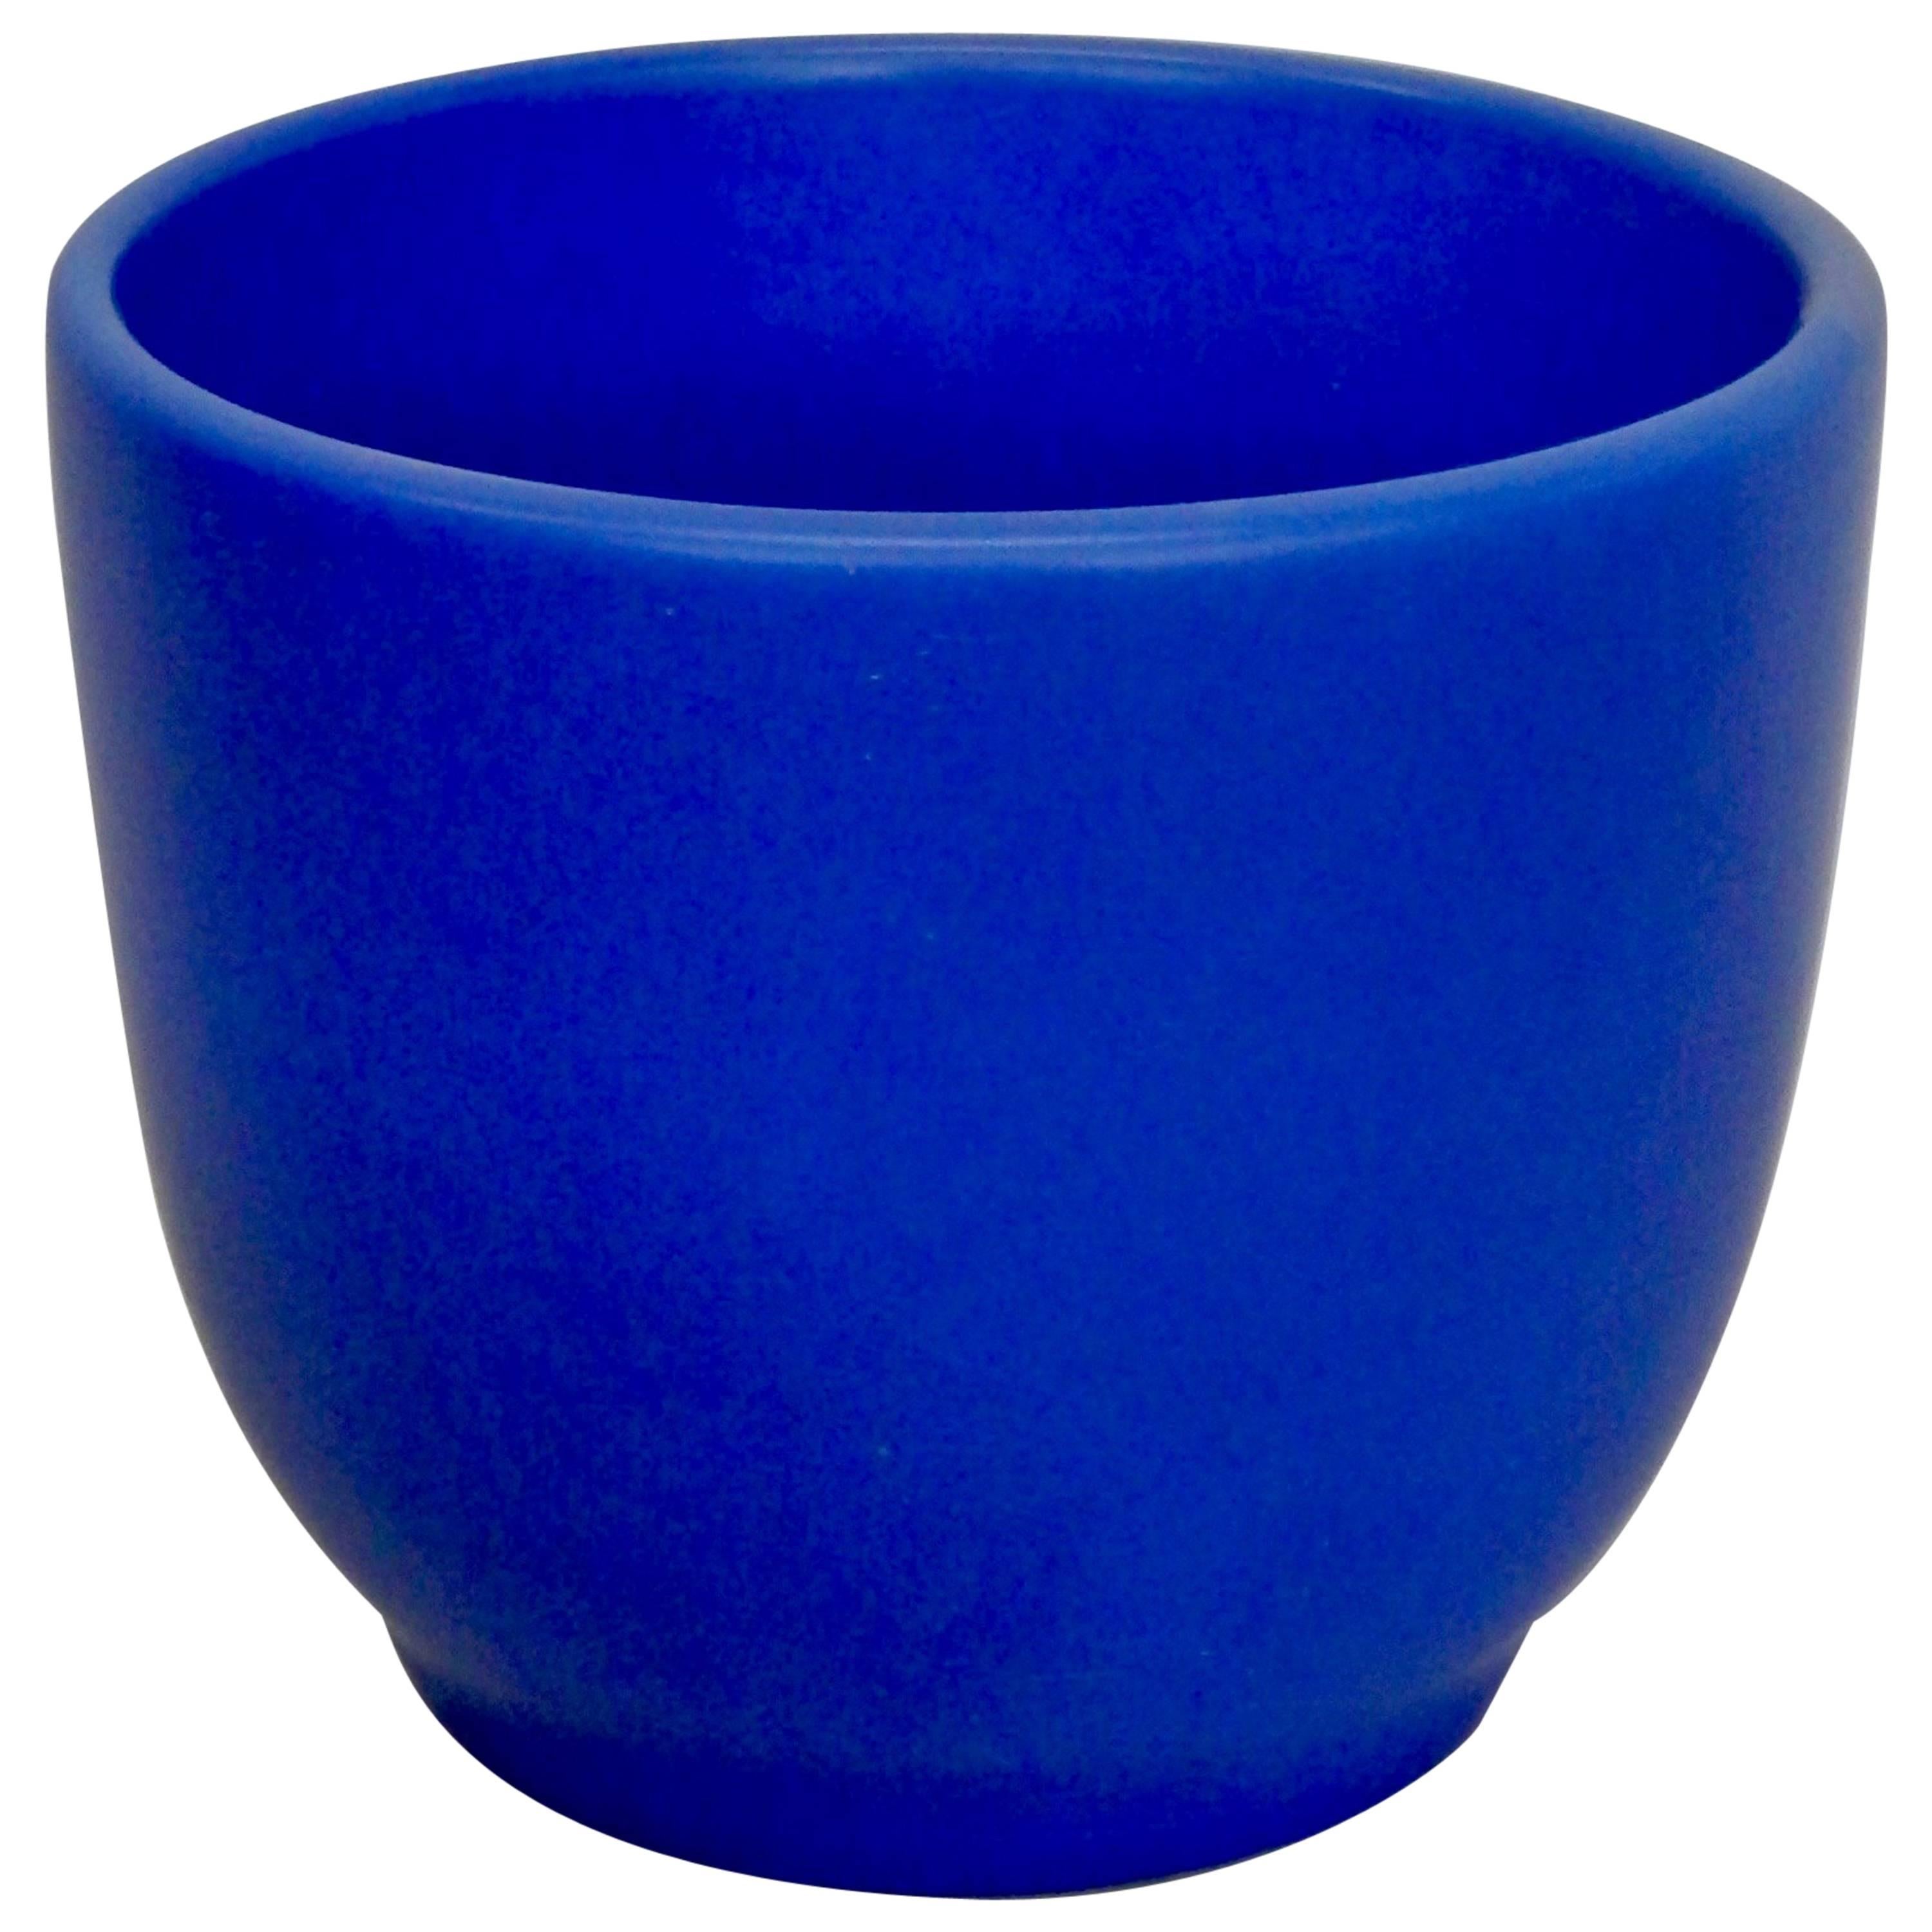 Vivid Blue California Modern Planter Pot by Gainey Ceramics